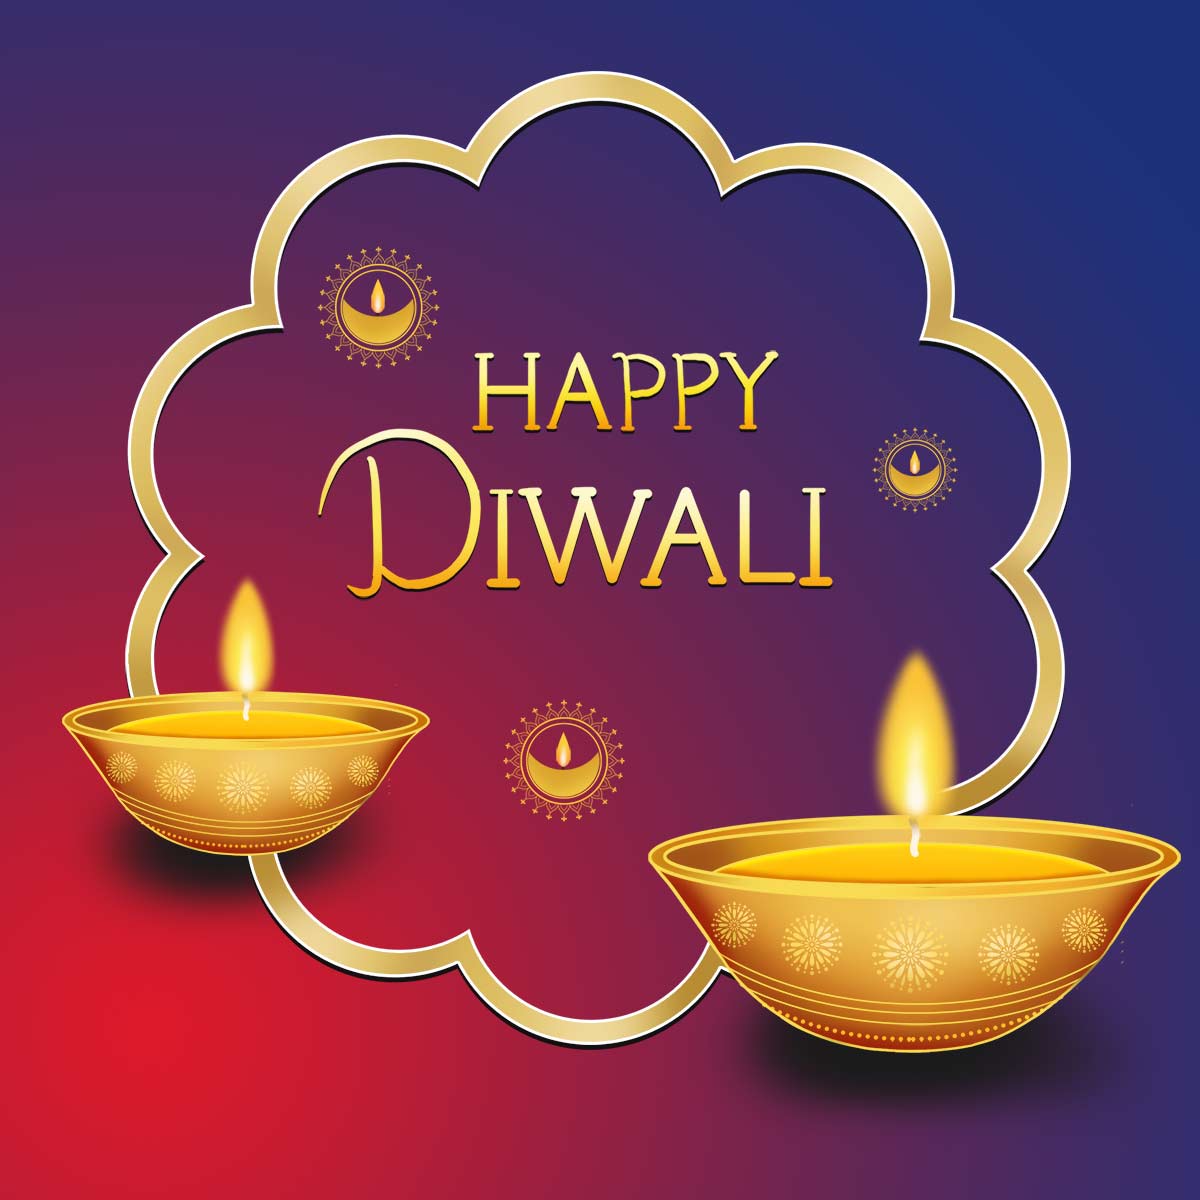 Happy Diwali Wishes 2021. Deepawali 2021. Best Happy Diwali Wishes, Quotes, Messages. Rangoli Design for Diwali 2021